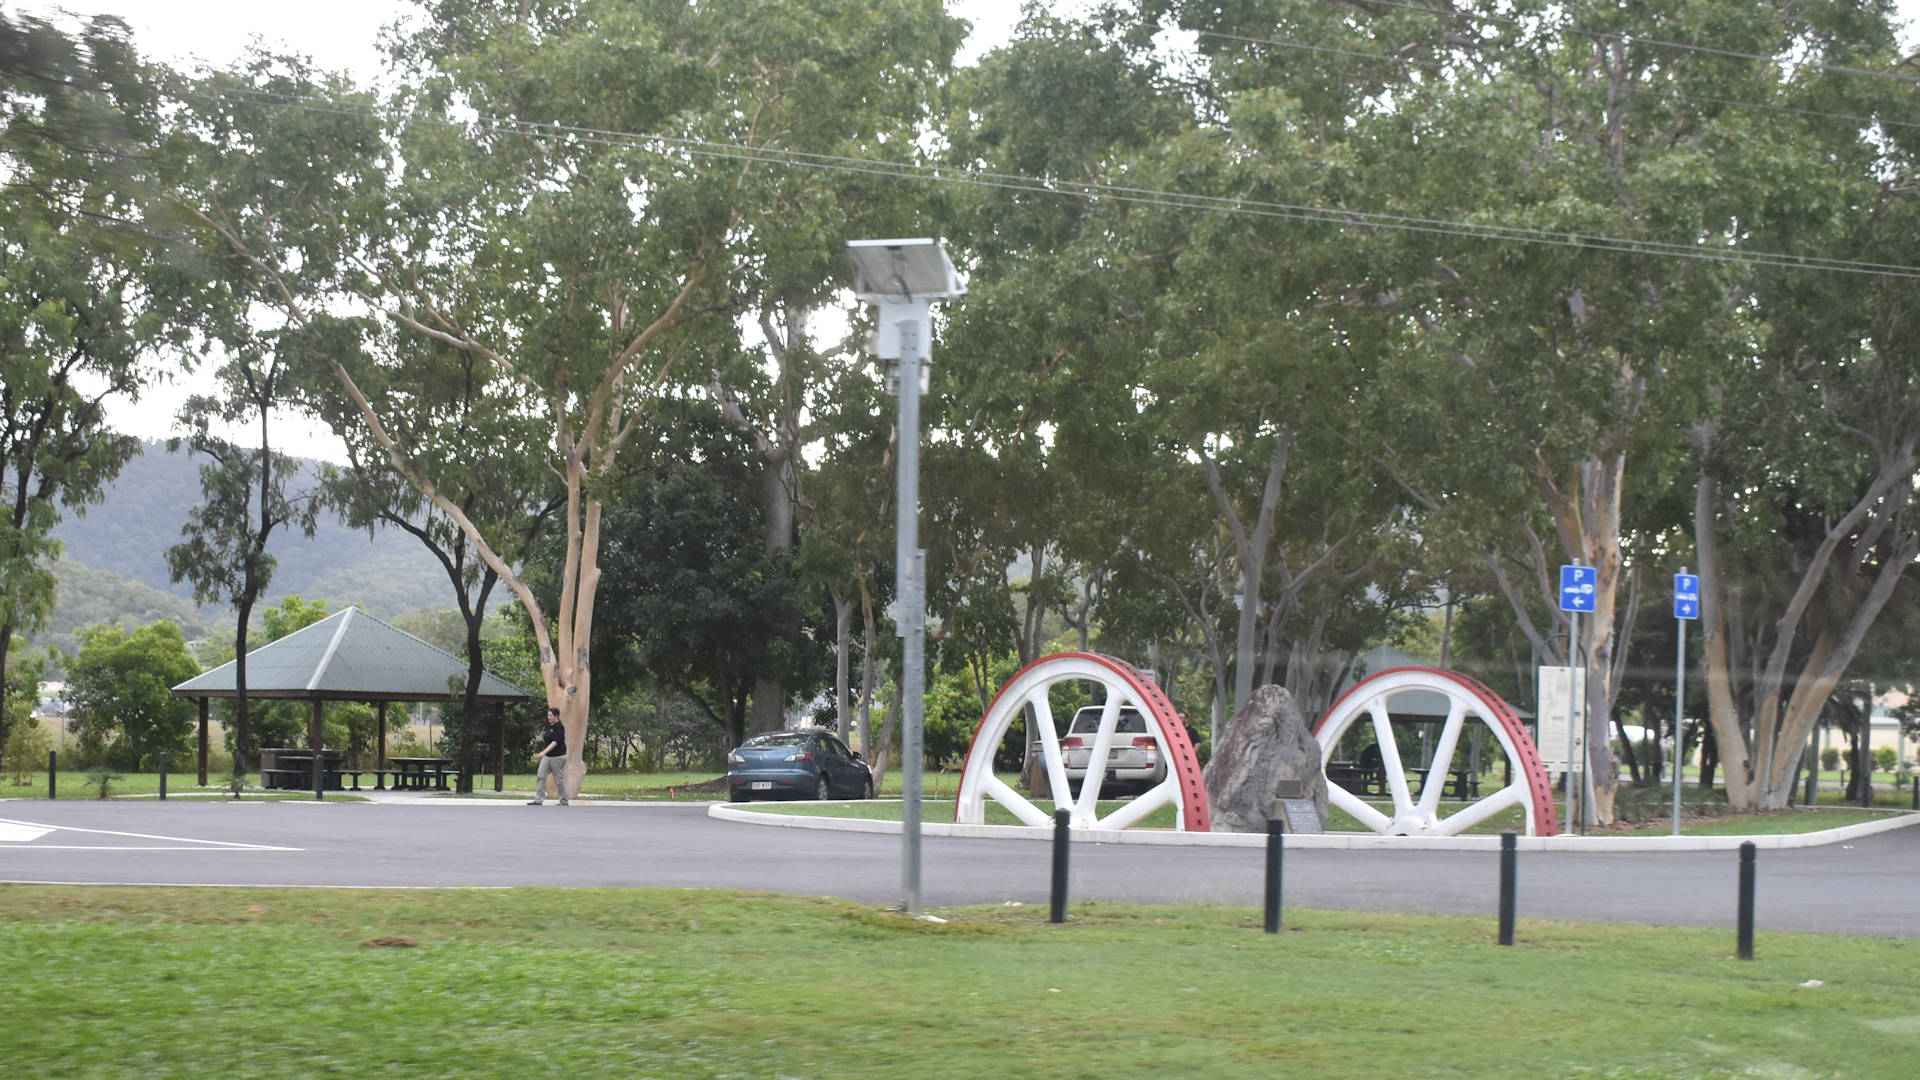 Willie Pye Teamsters Memorial Park, south of Port Douglas